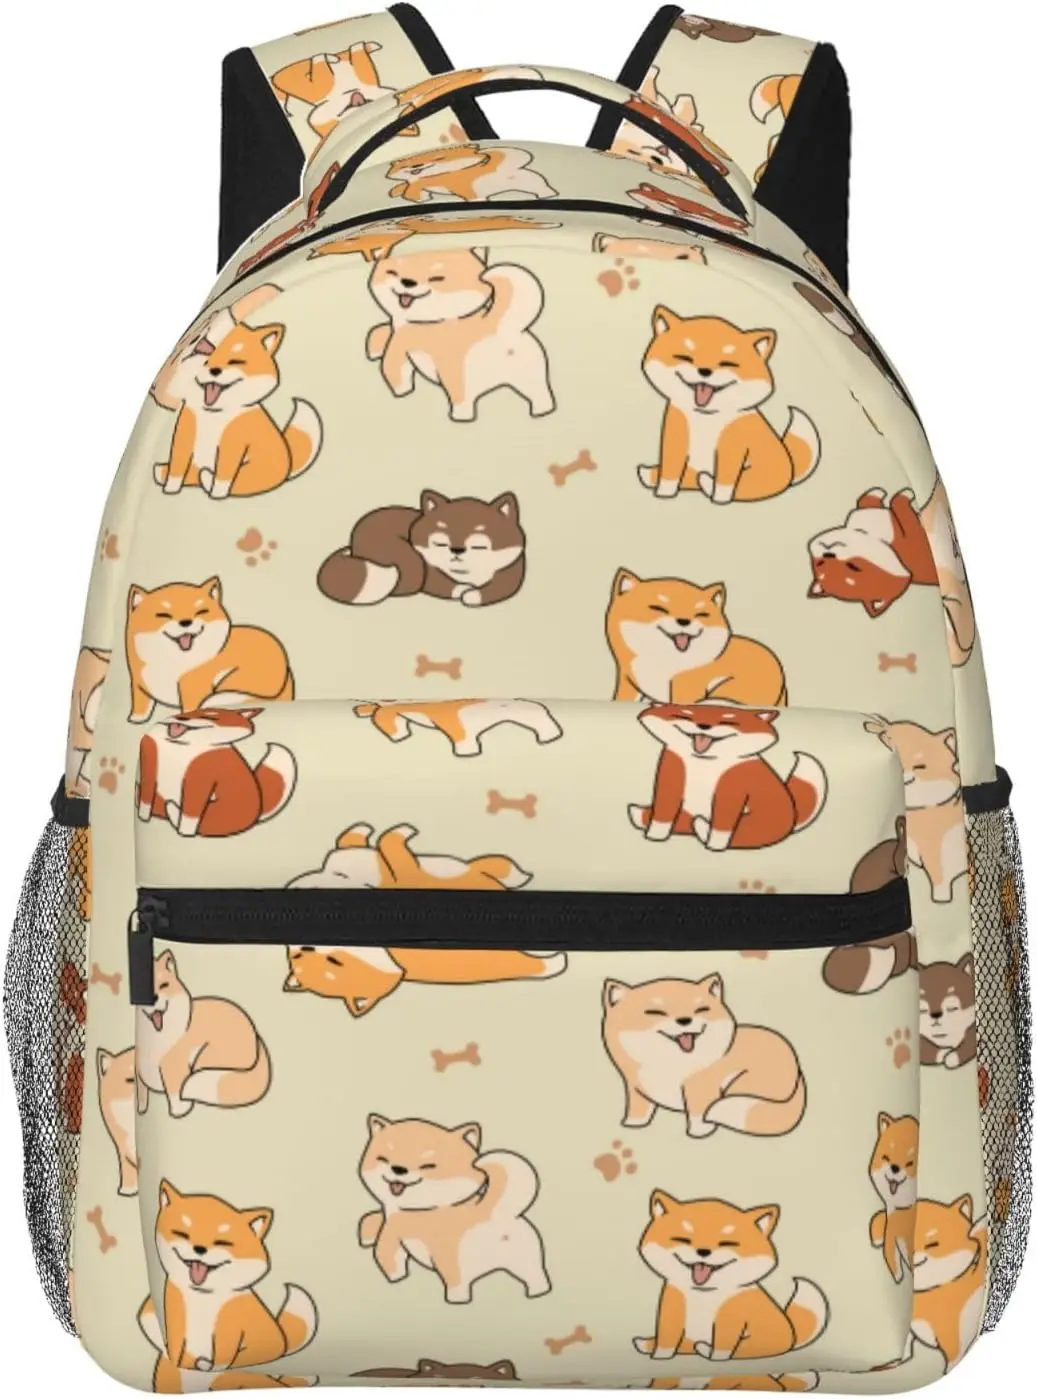 

Lovely Cute Shiba Inu Dog Lightweight Laptop Backpack for Women Men College Bookbag Casual Daypack Travel Bag